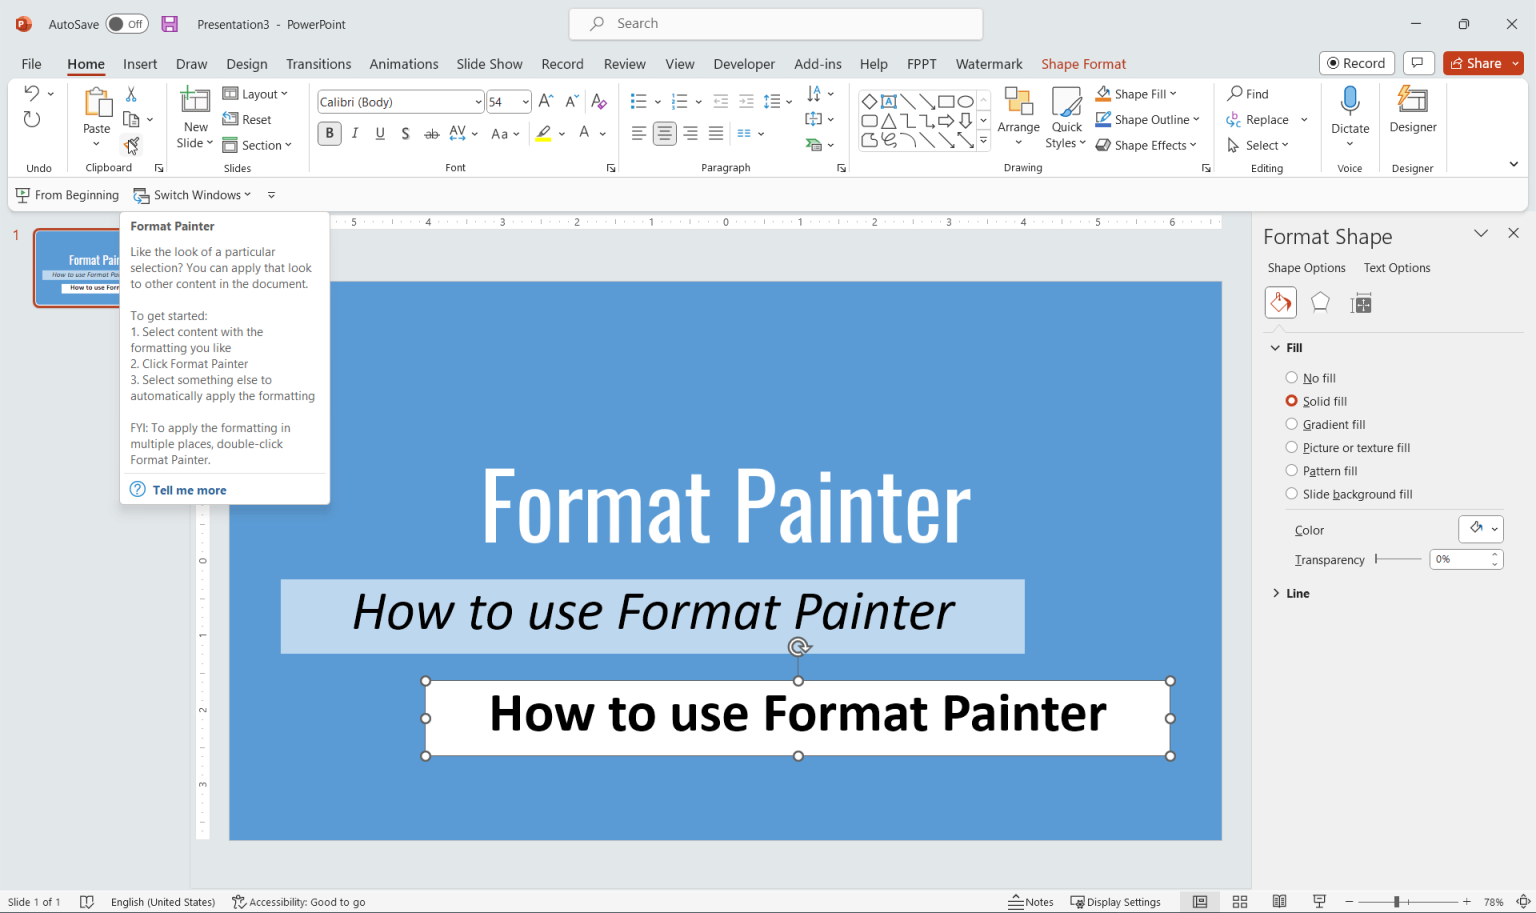 format painter in powerpoint presentation